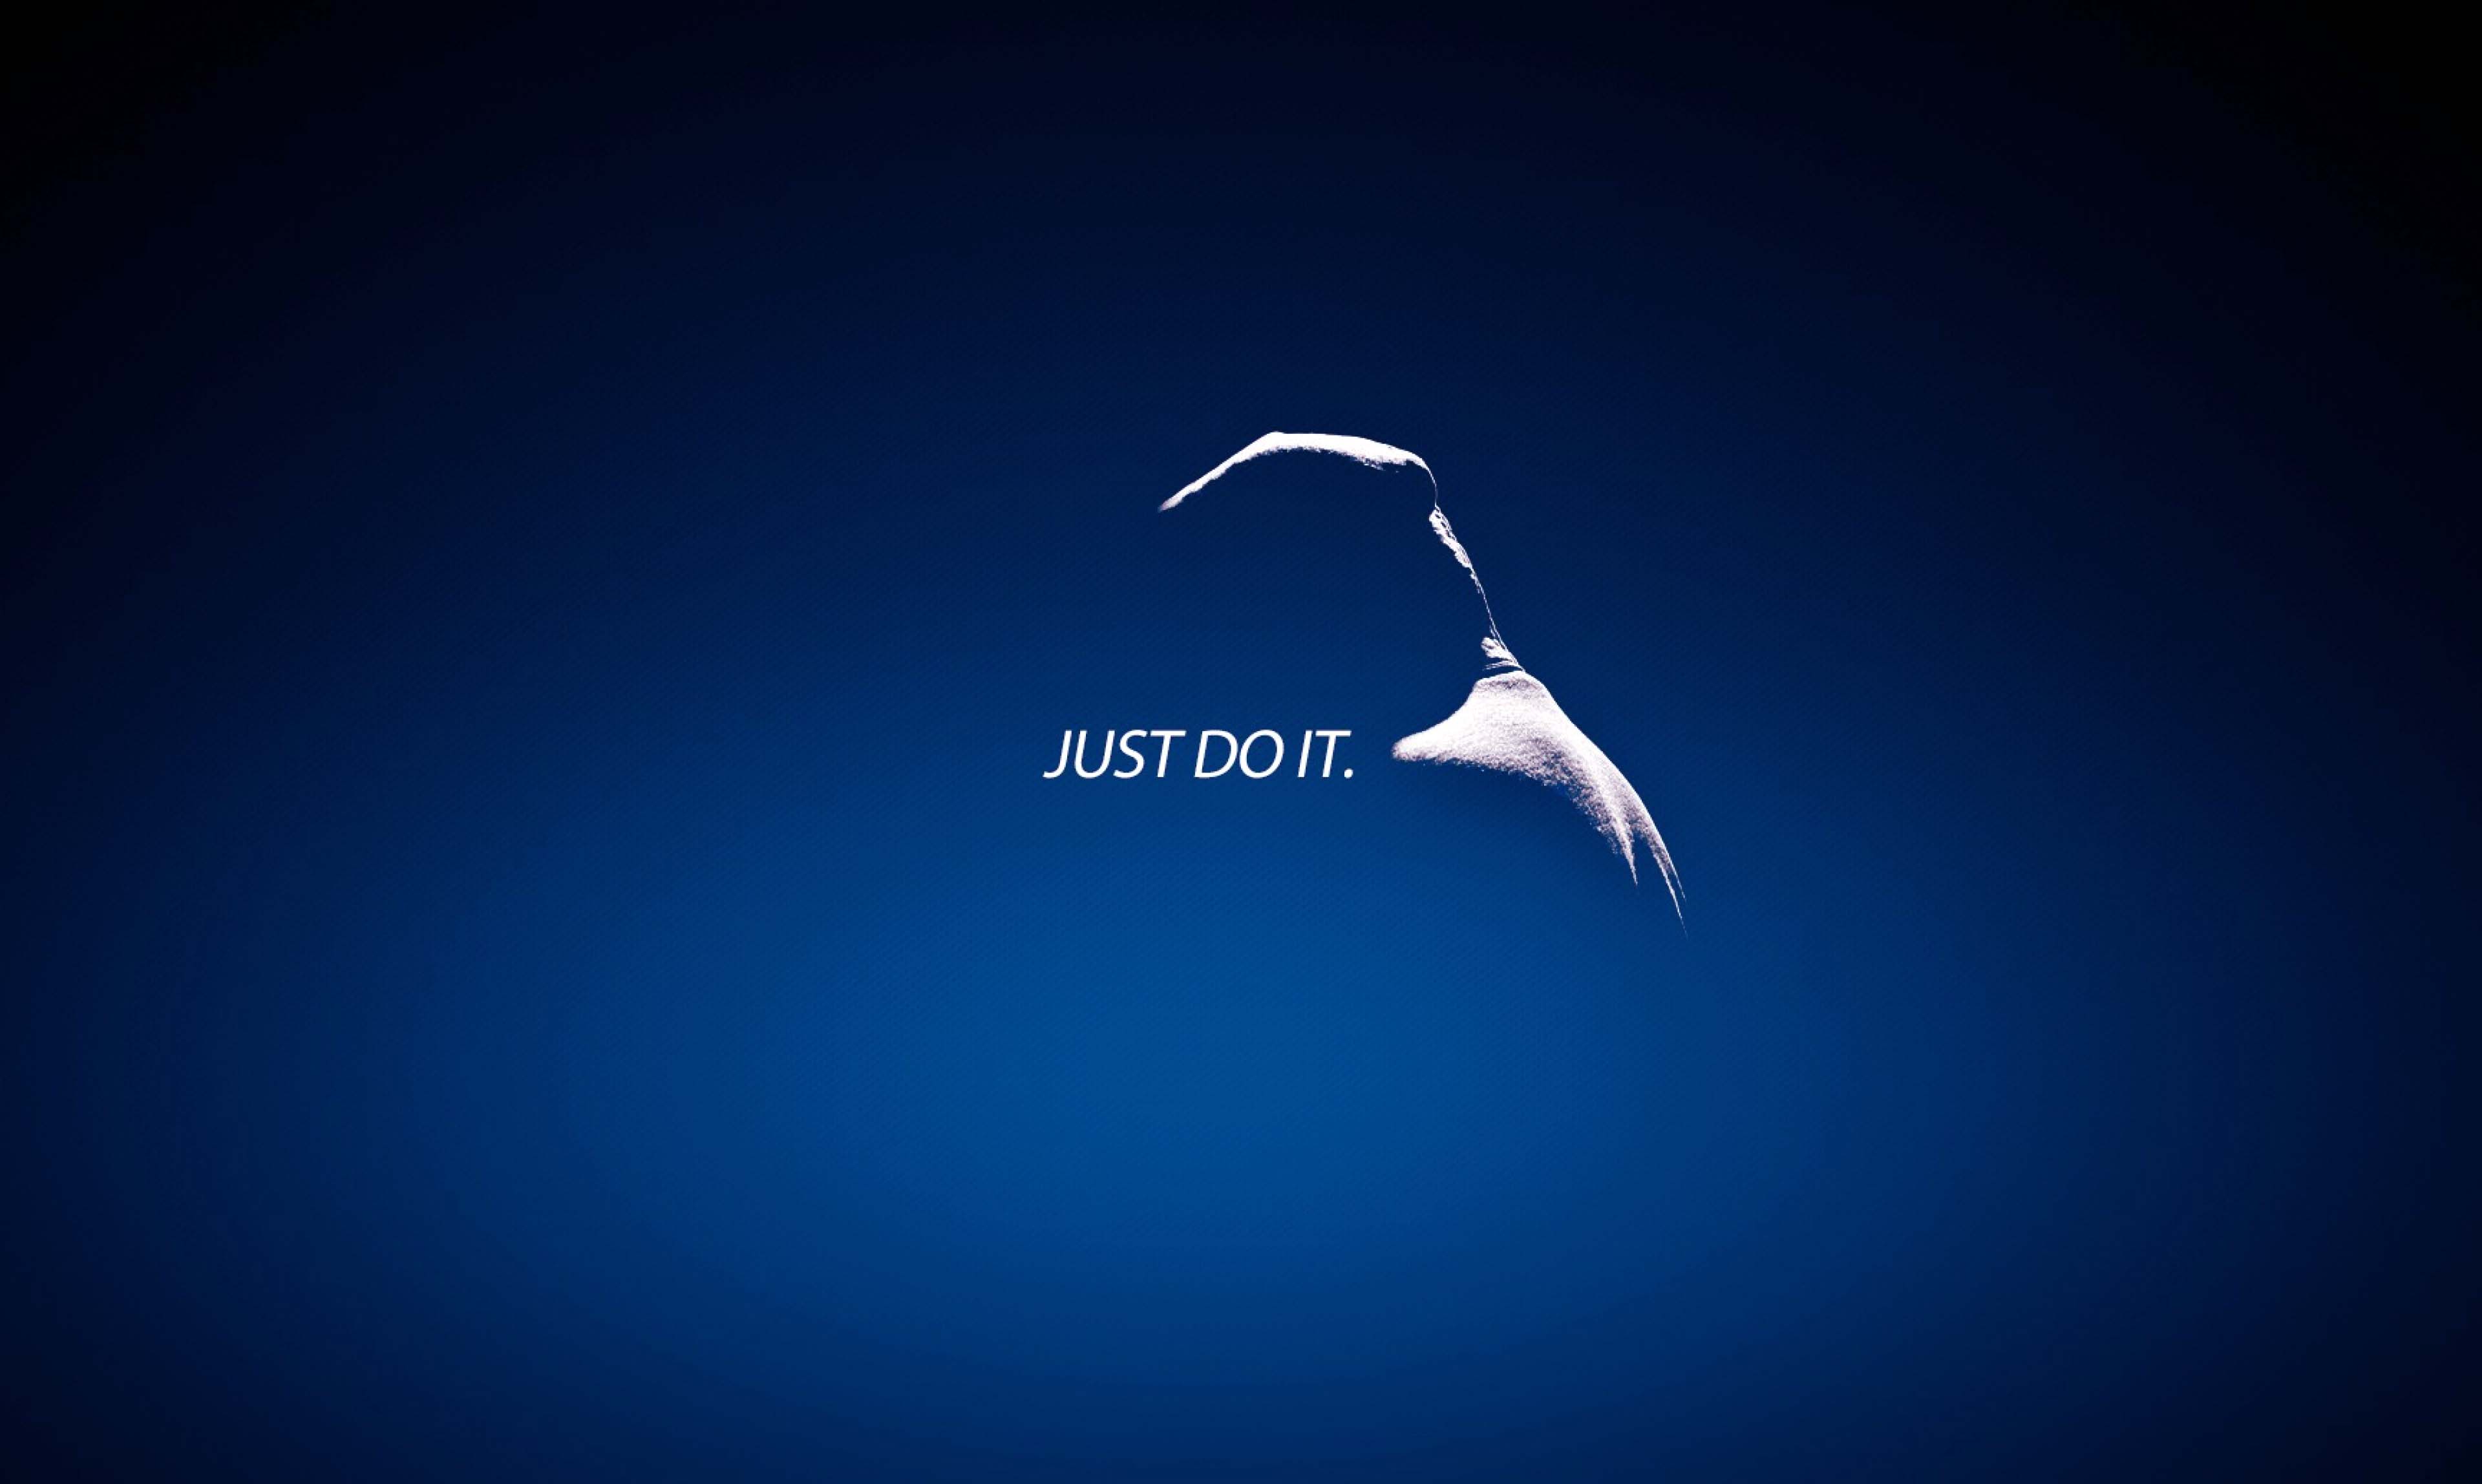 Nike Wallpaper "Just Do It" Popular HD Image